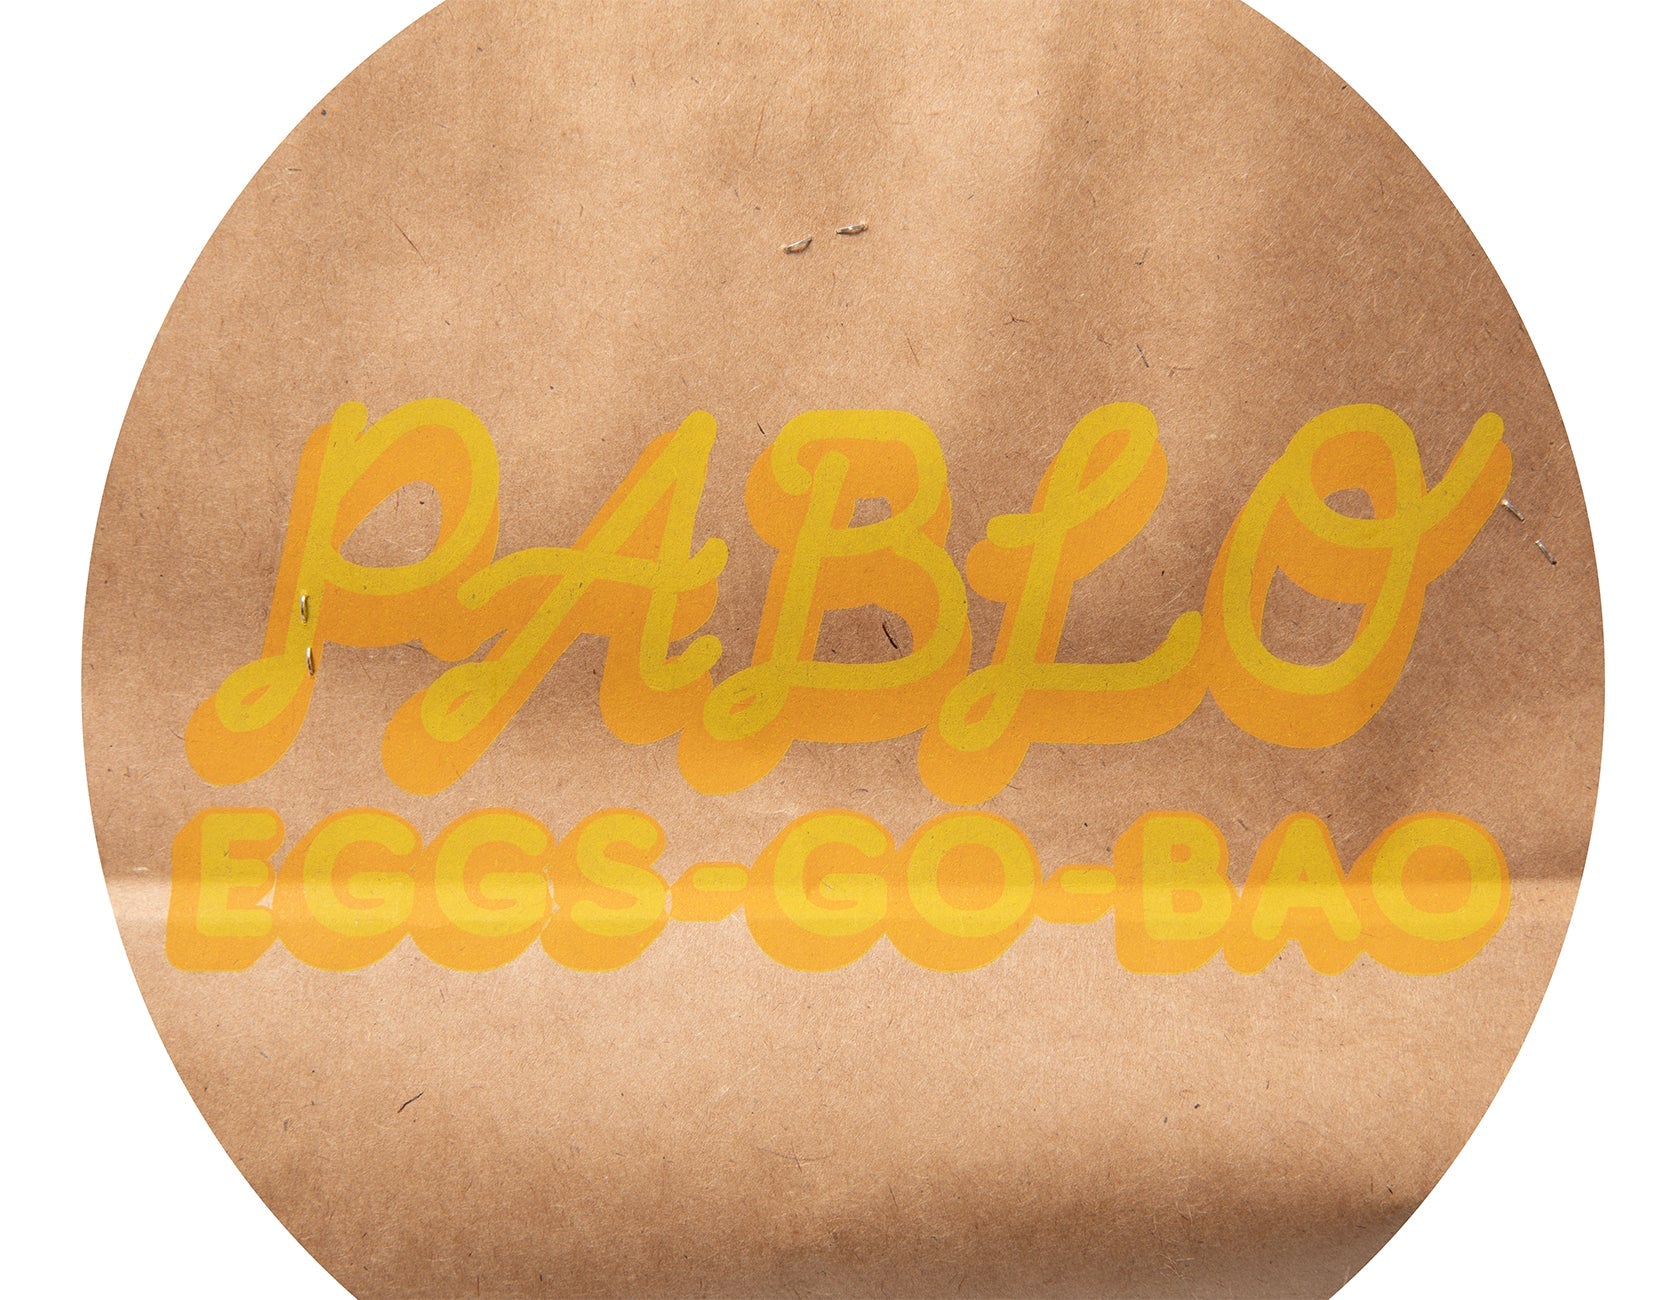 Pablo Eggs-Go-Bao Has Us Hooked